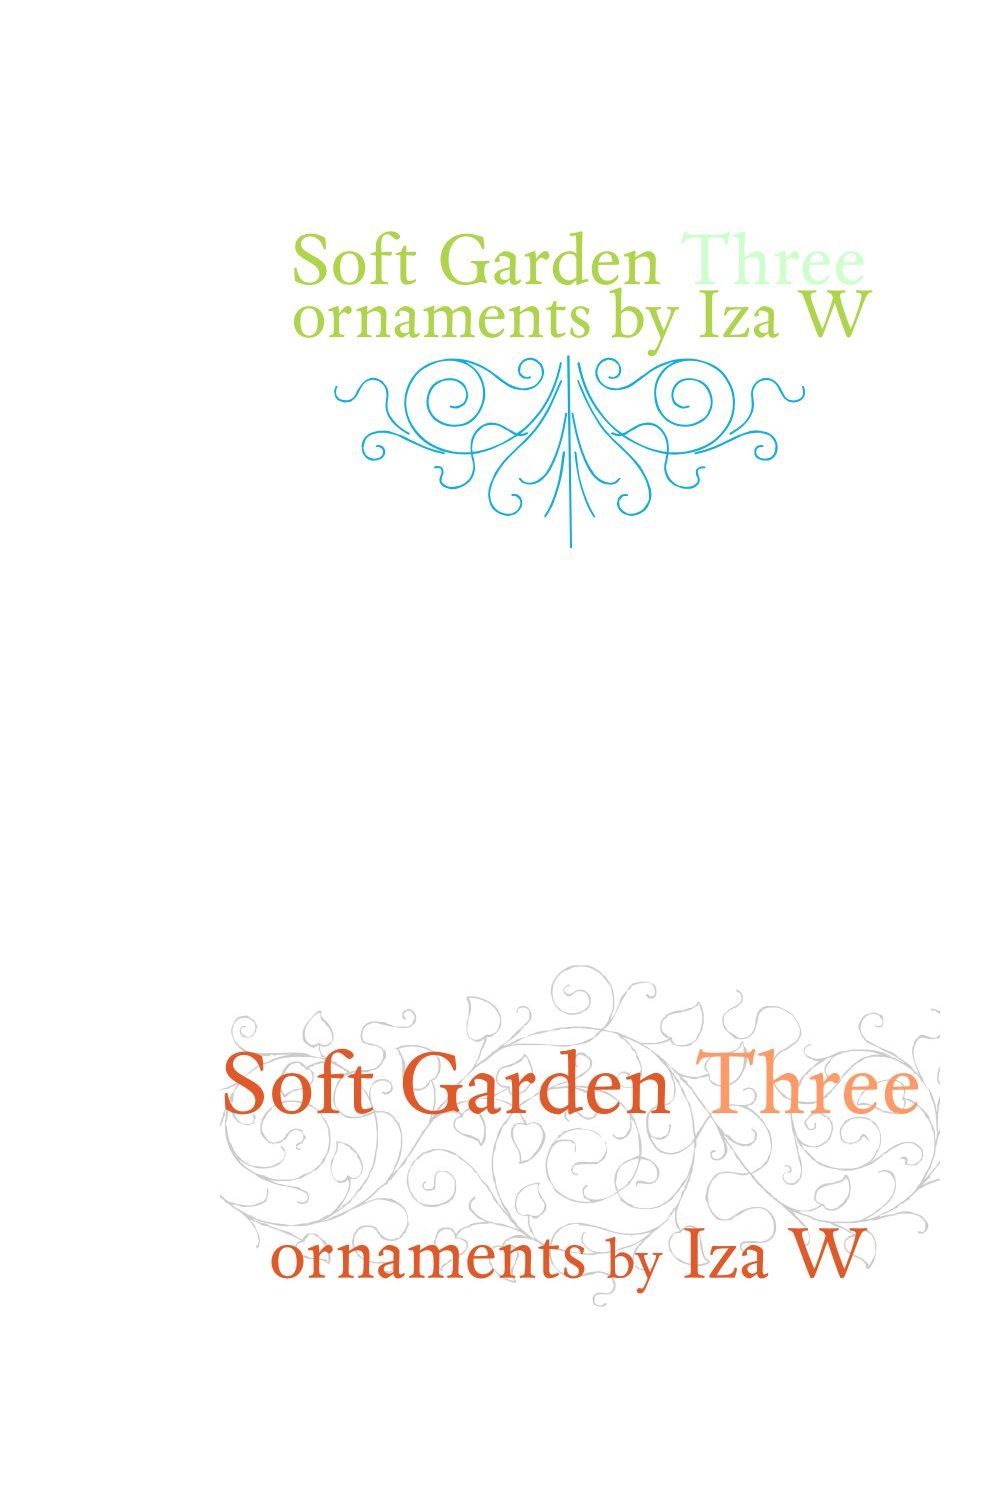 Soft Garden Three pinterest preview image.